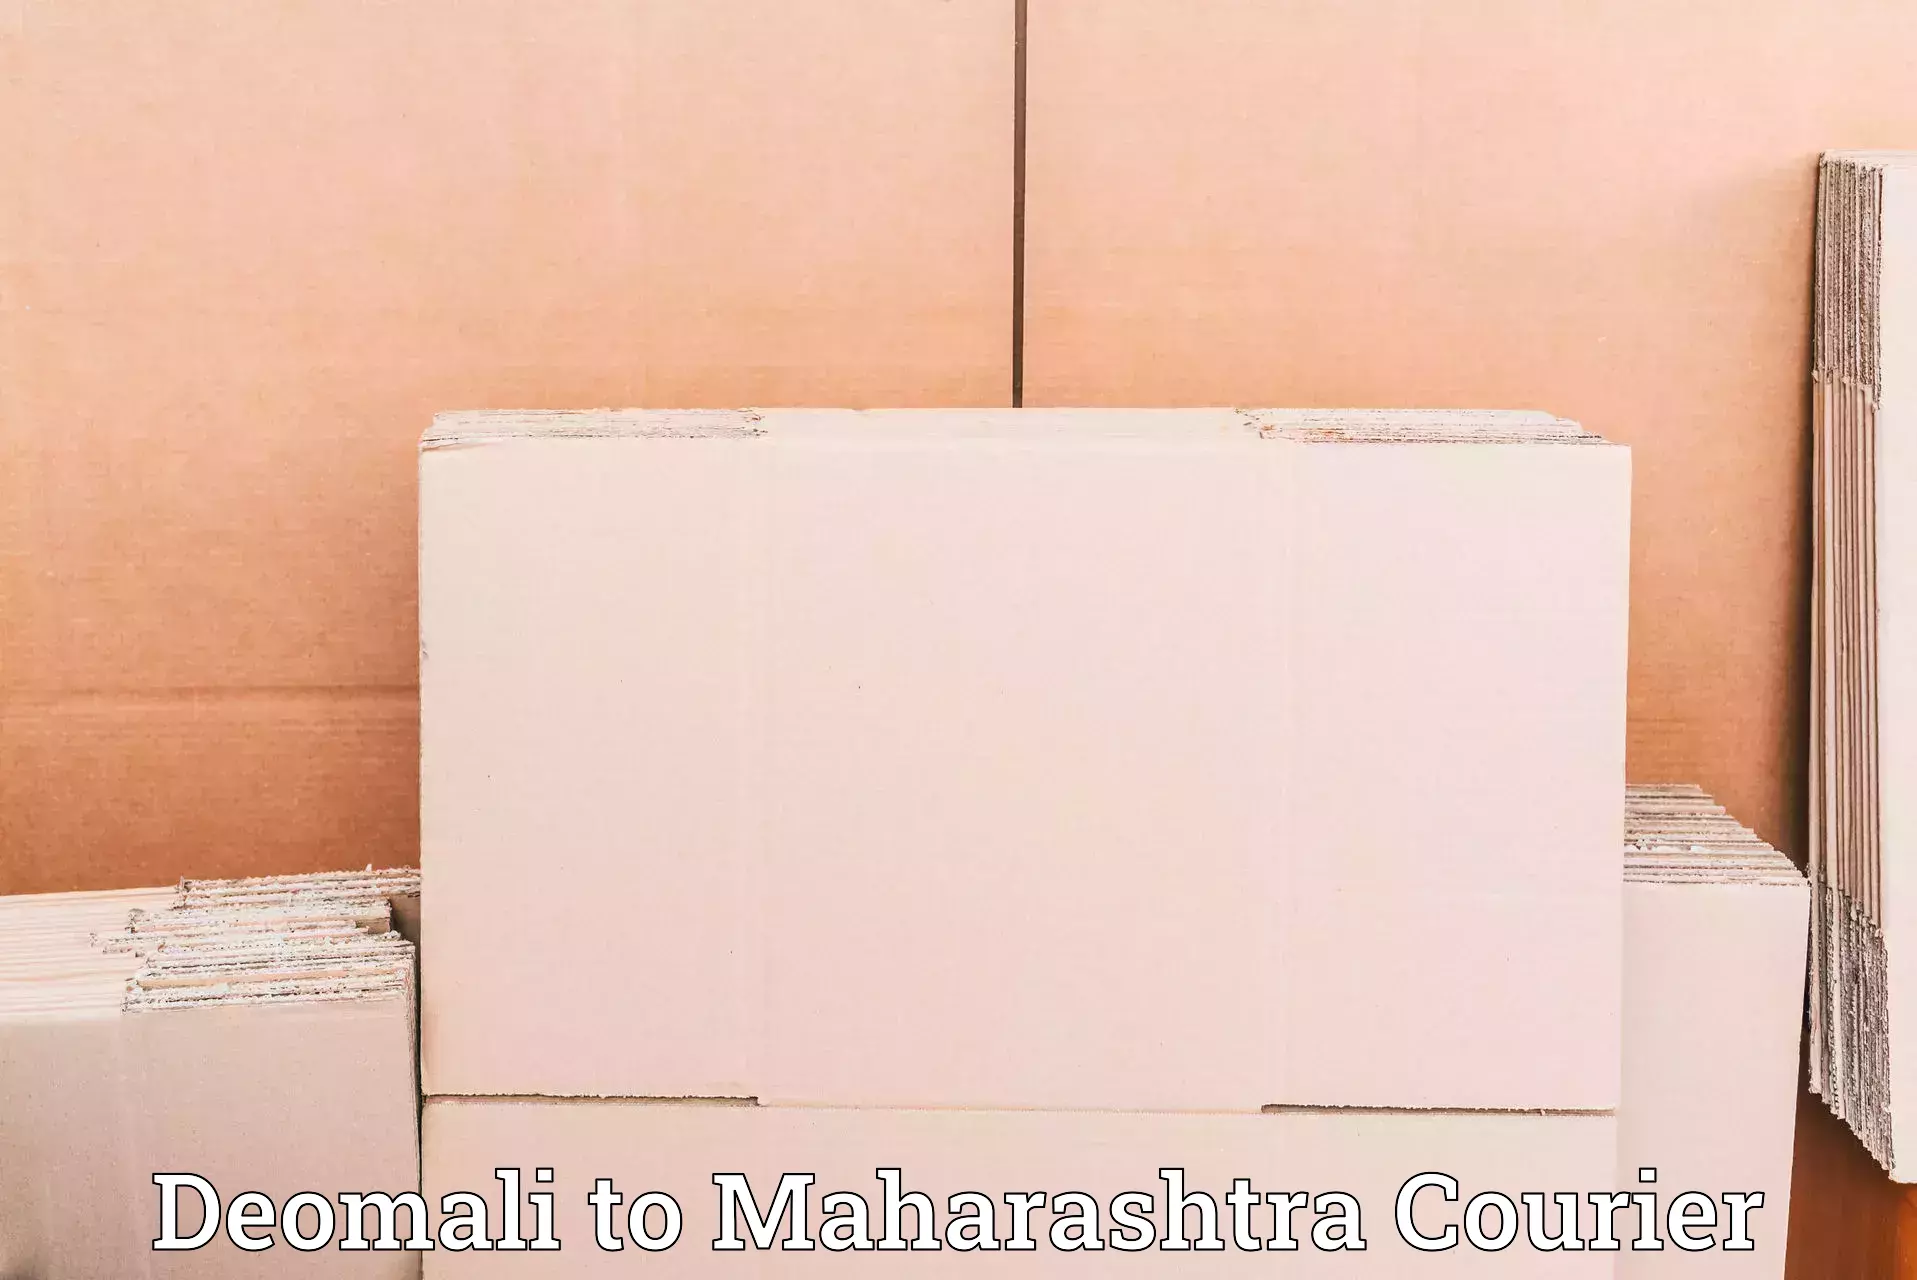 Multi-city courier Deomali to Mahabaleshwar